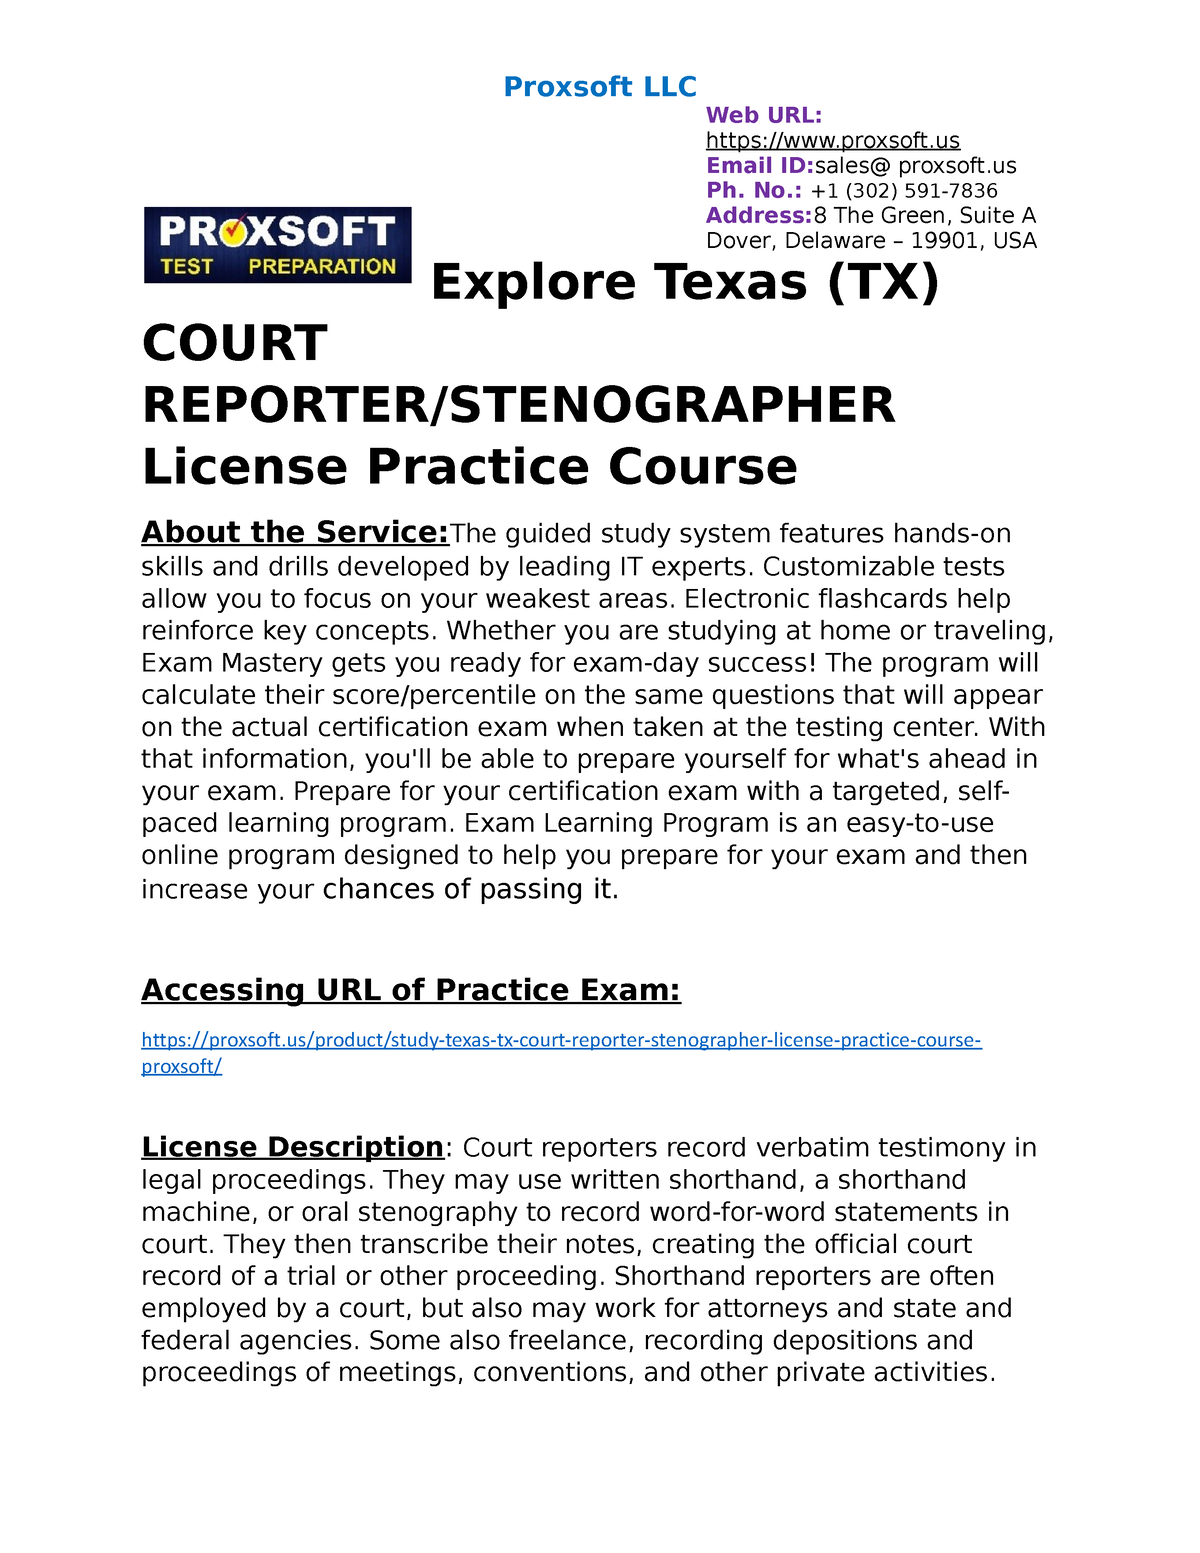 Explore Texas (TX) COURT REPORTER/STENOGRAPHER License Practice Course